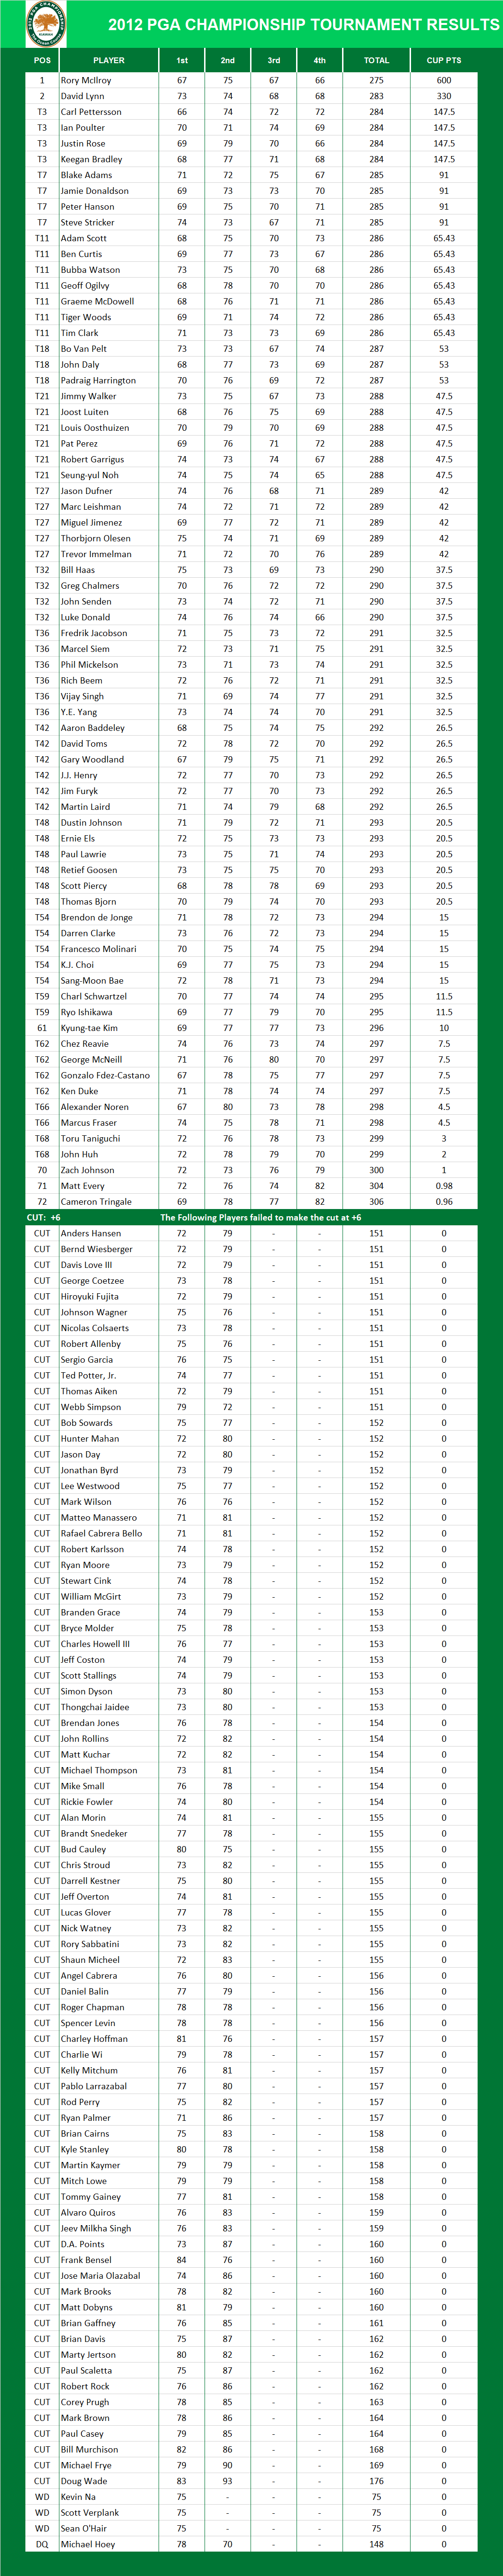 2012 PGA Championship Results